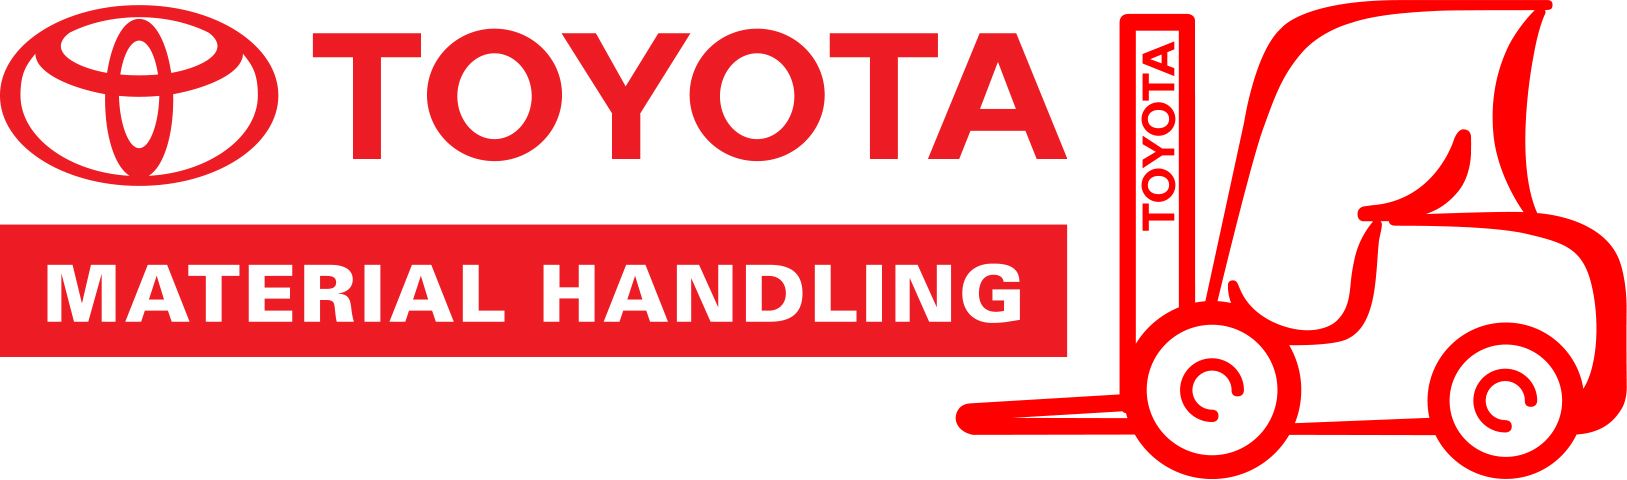 Toyota Material Handling Australia